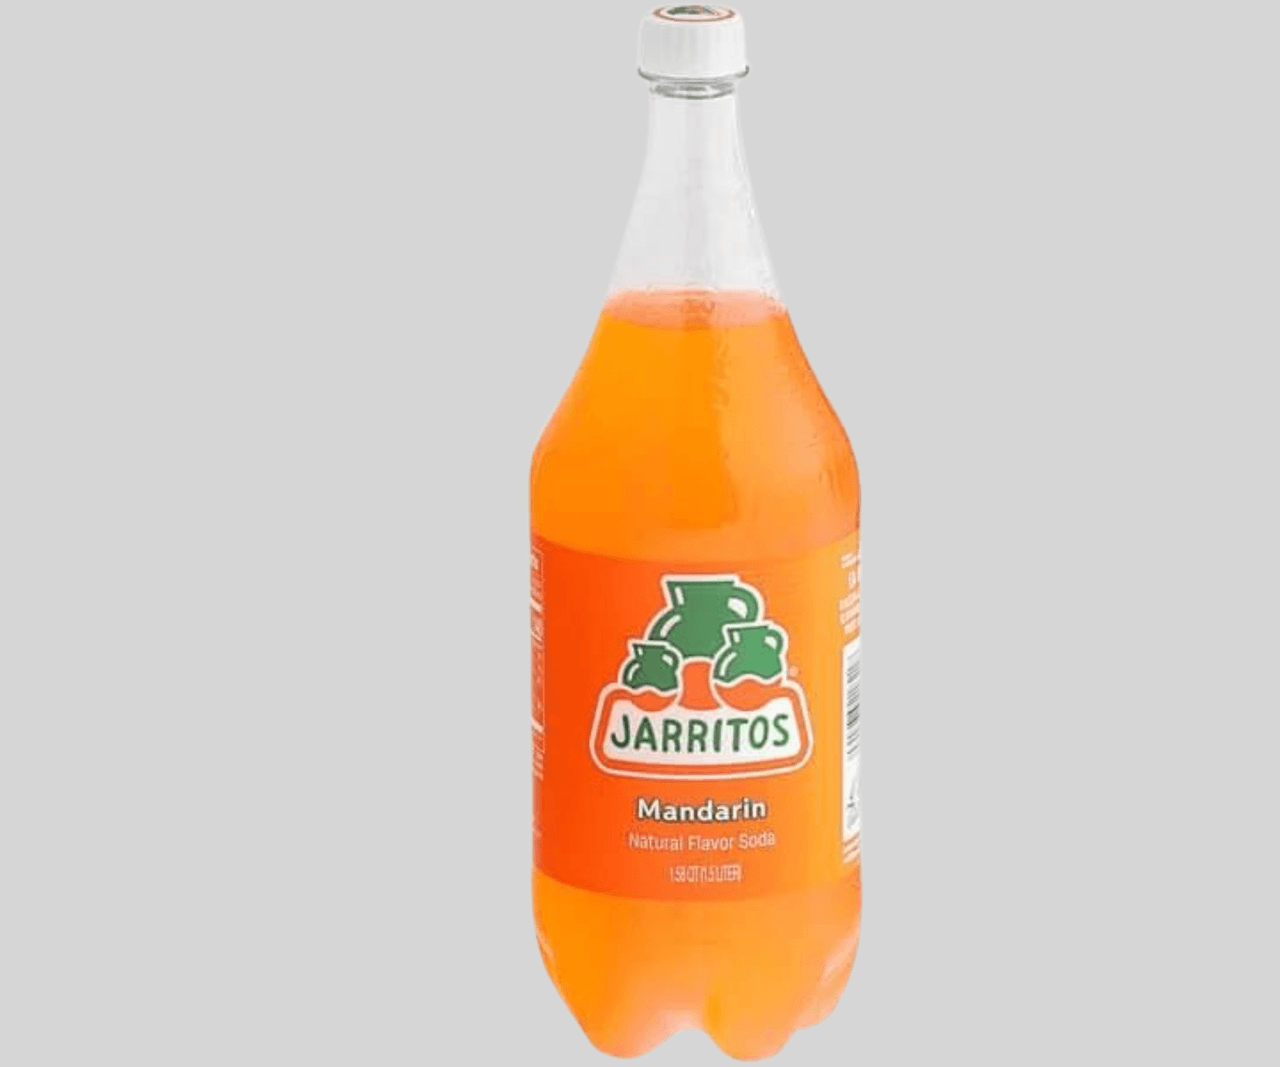 Jarritos Mandarin Soda - Authentic Mexican Flavor in a 1.5L Bottle